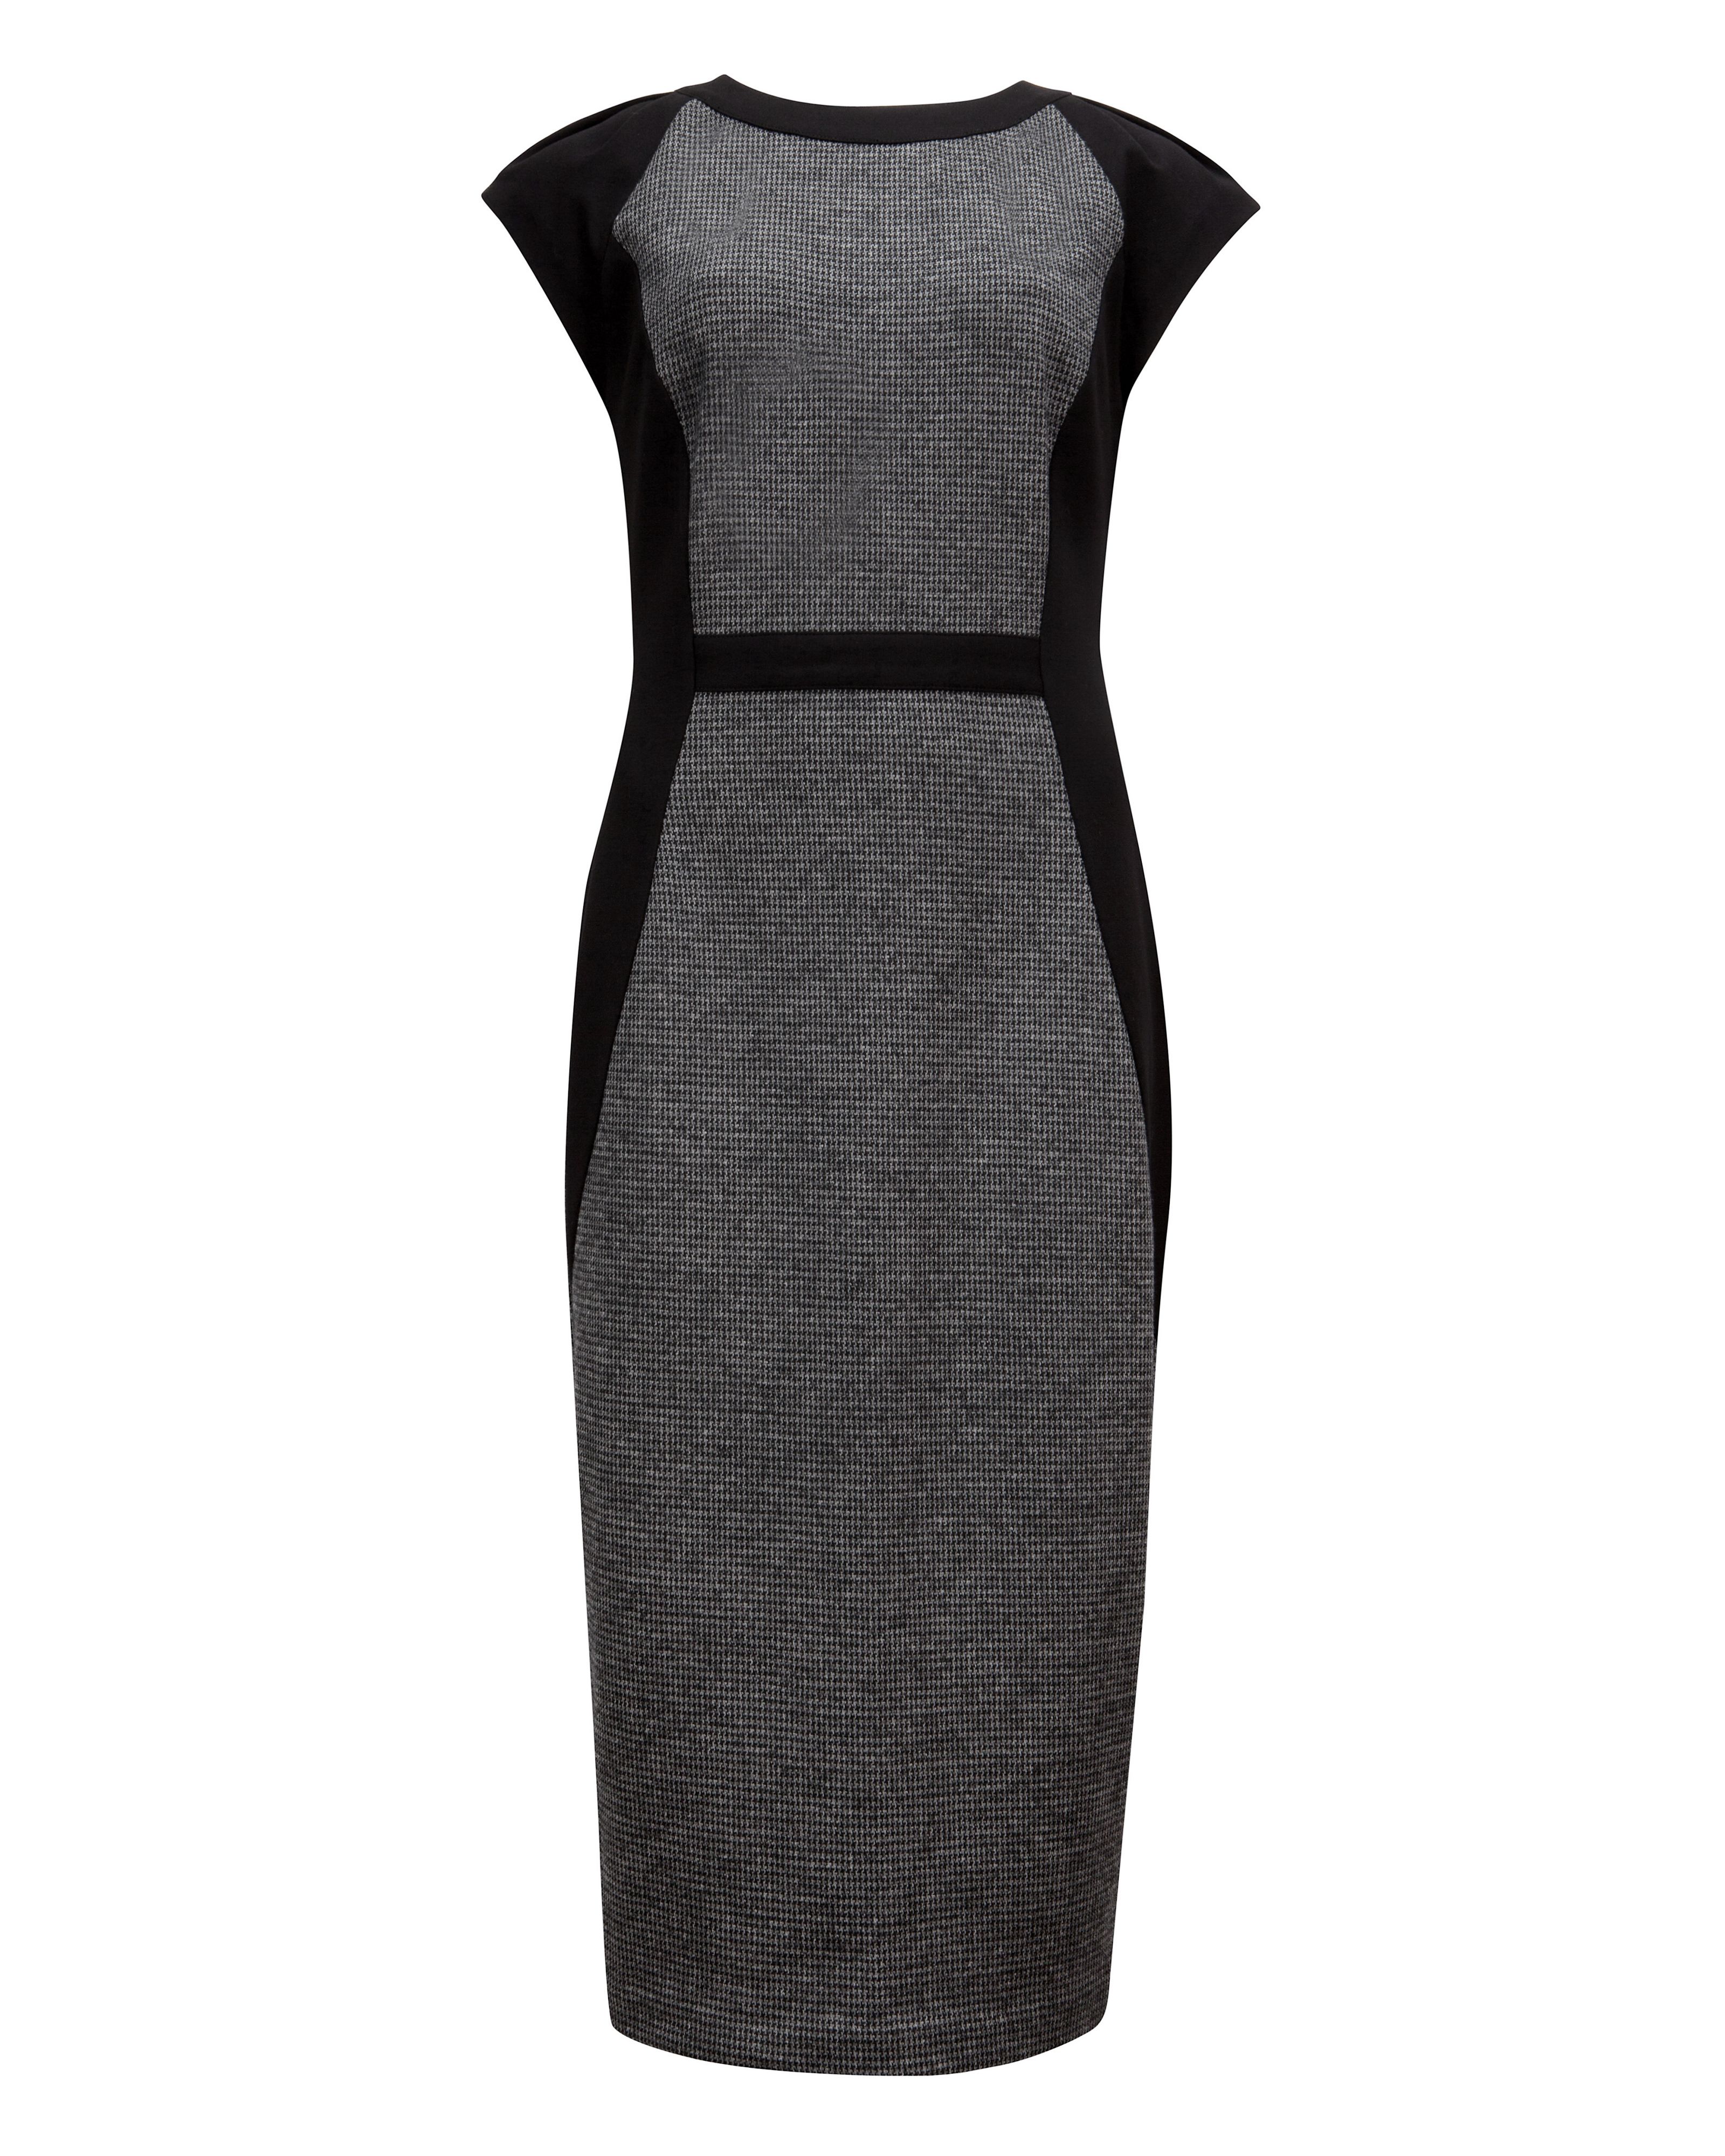 Ted baker Faridia Contrast Panel Midi Dress in Black | Lyst